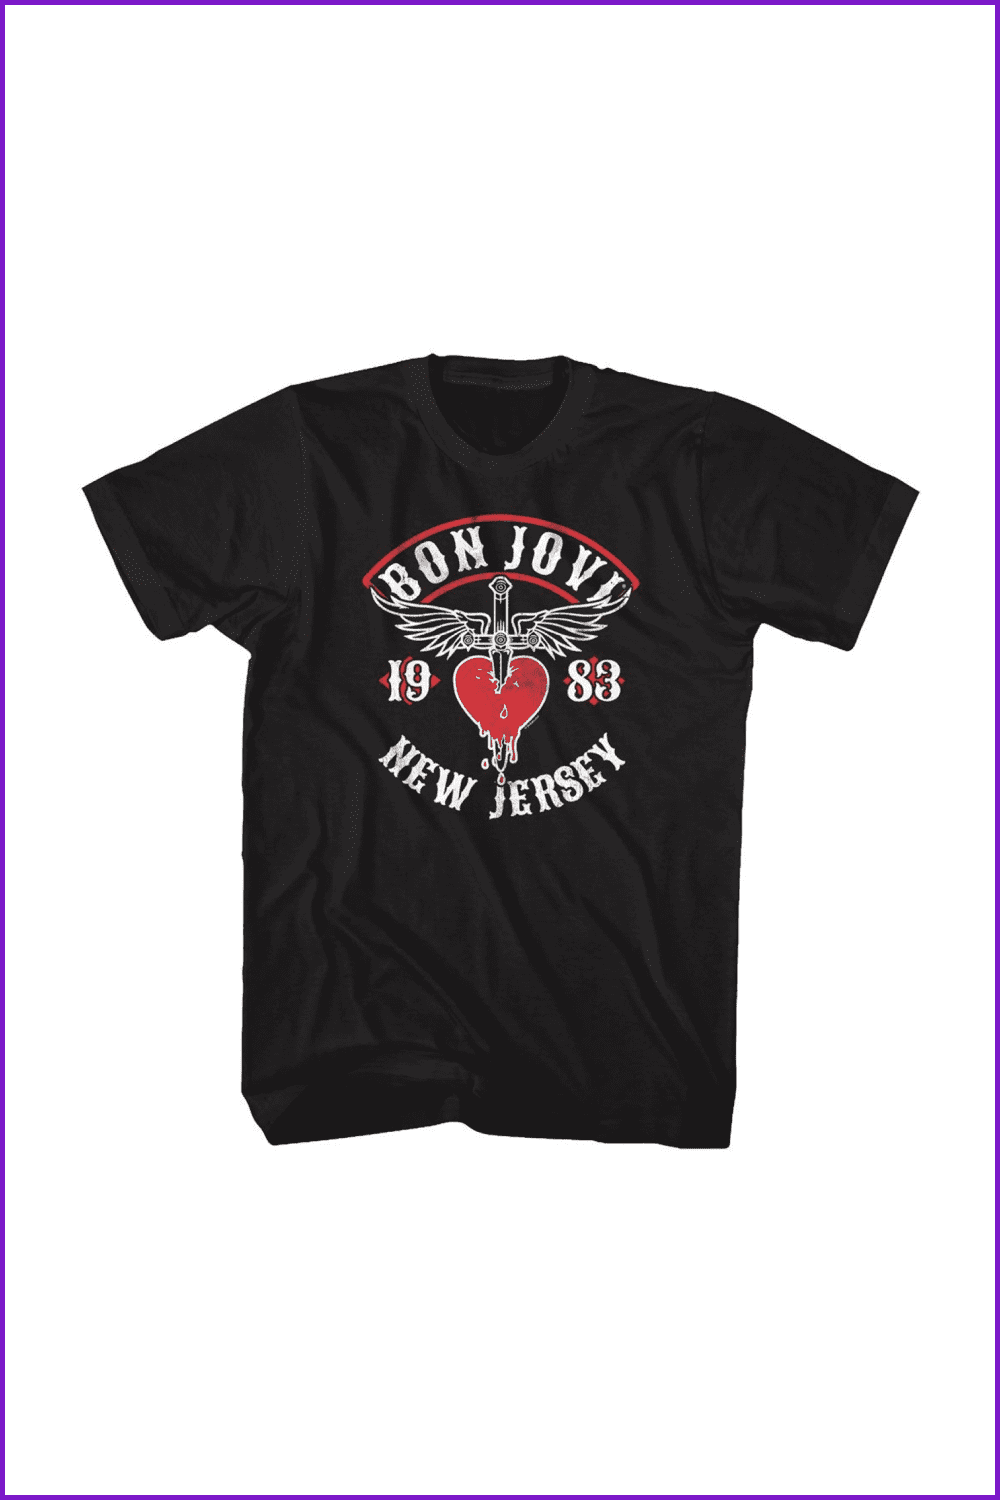 Bon Jovi T-Shirt - New Jersey 1983.